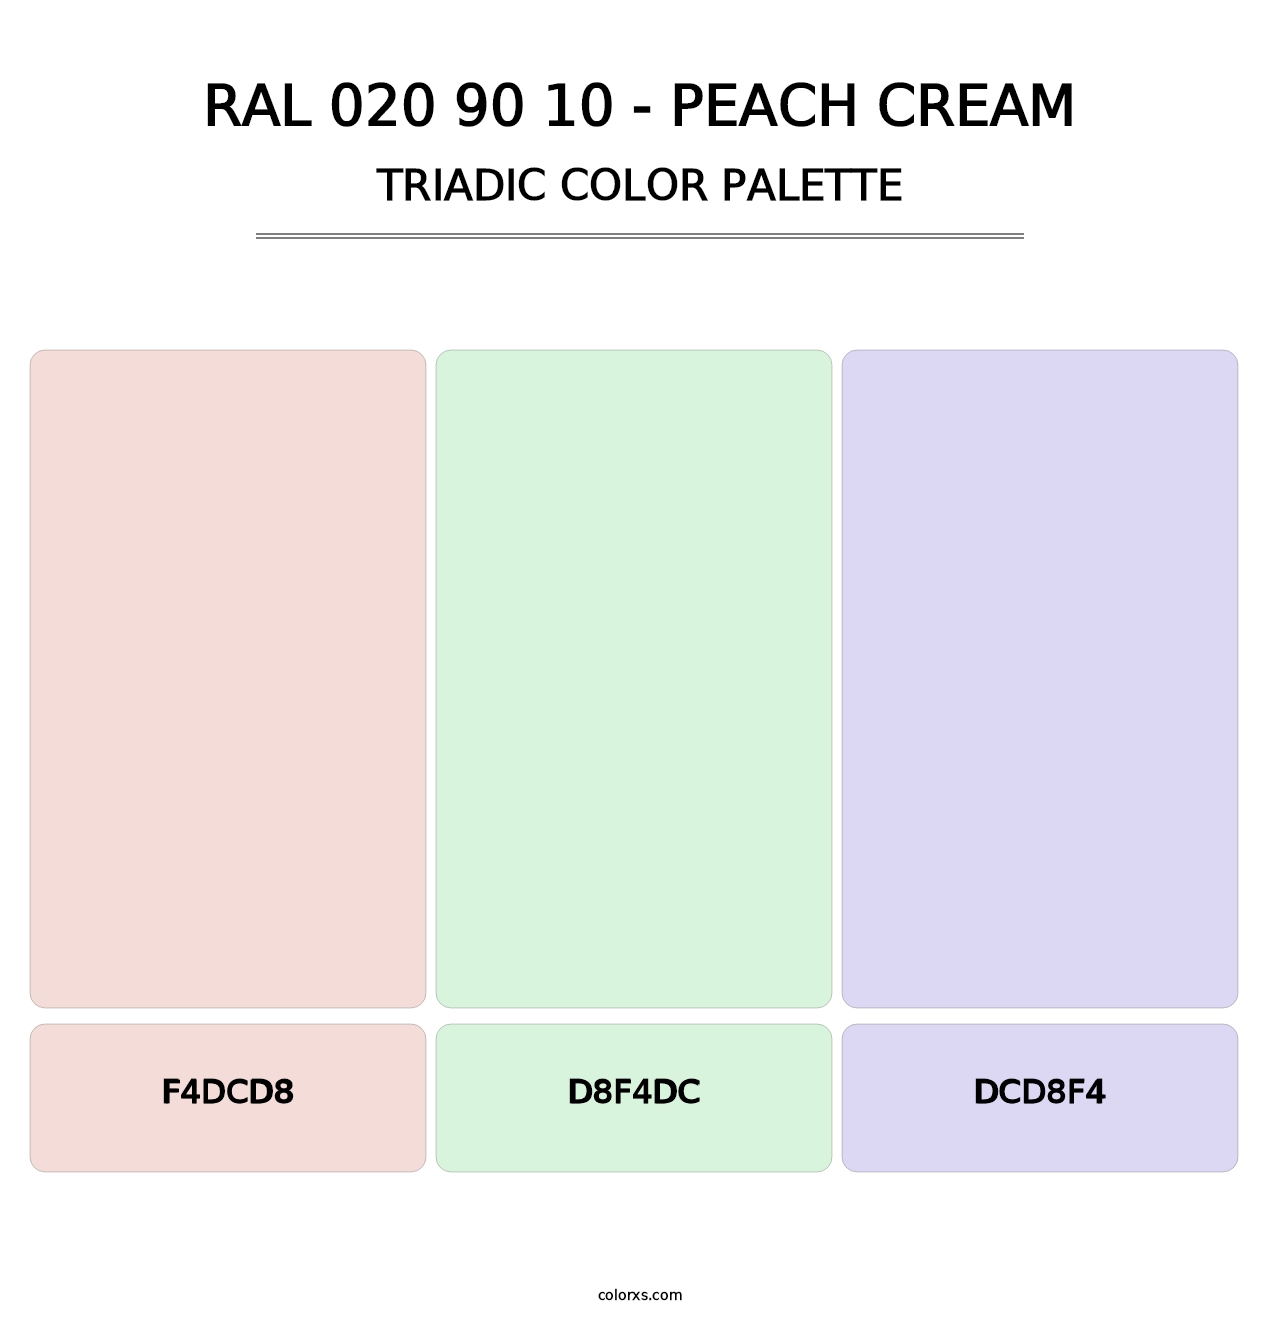 RAL 020 90 10 - Peach Cream - Triadic Color Palette